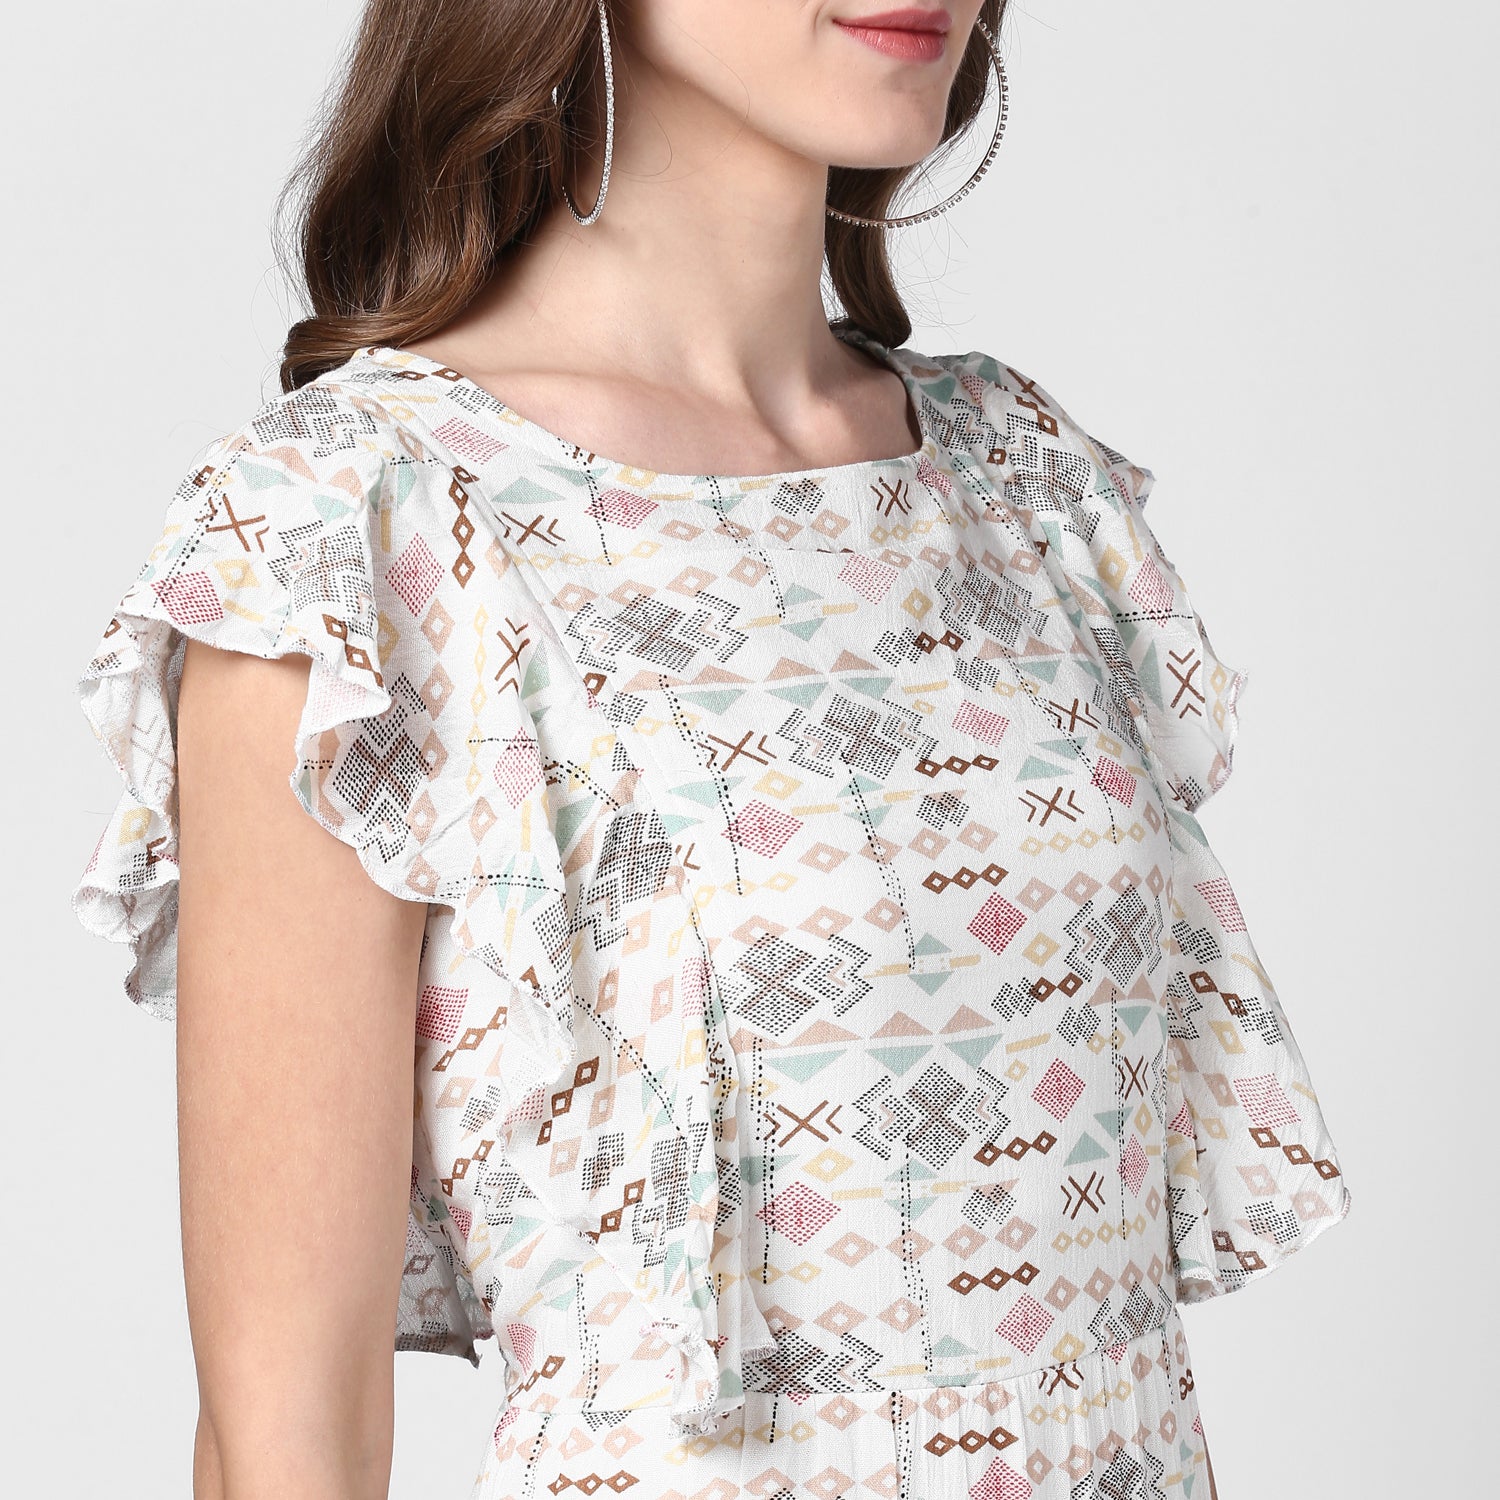 Women's Off White Printed Rayon Crepe Maxi Dress - StyleStone